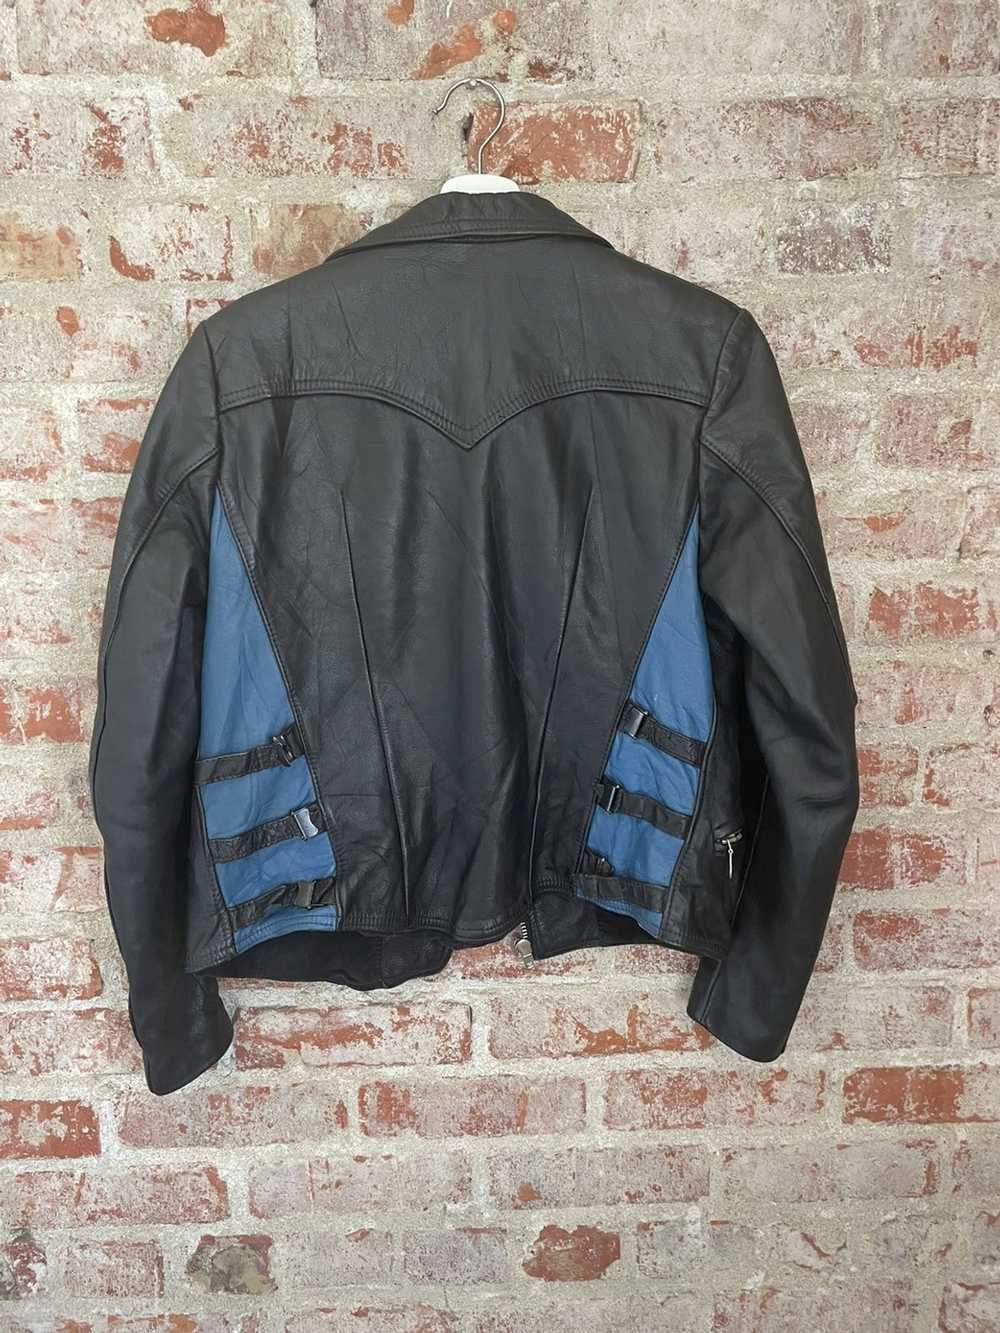 Vintage Vintage 1960s Leather Motorcycle Jacket - image 6